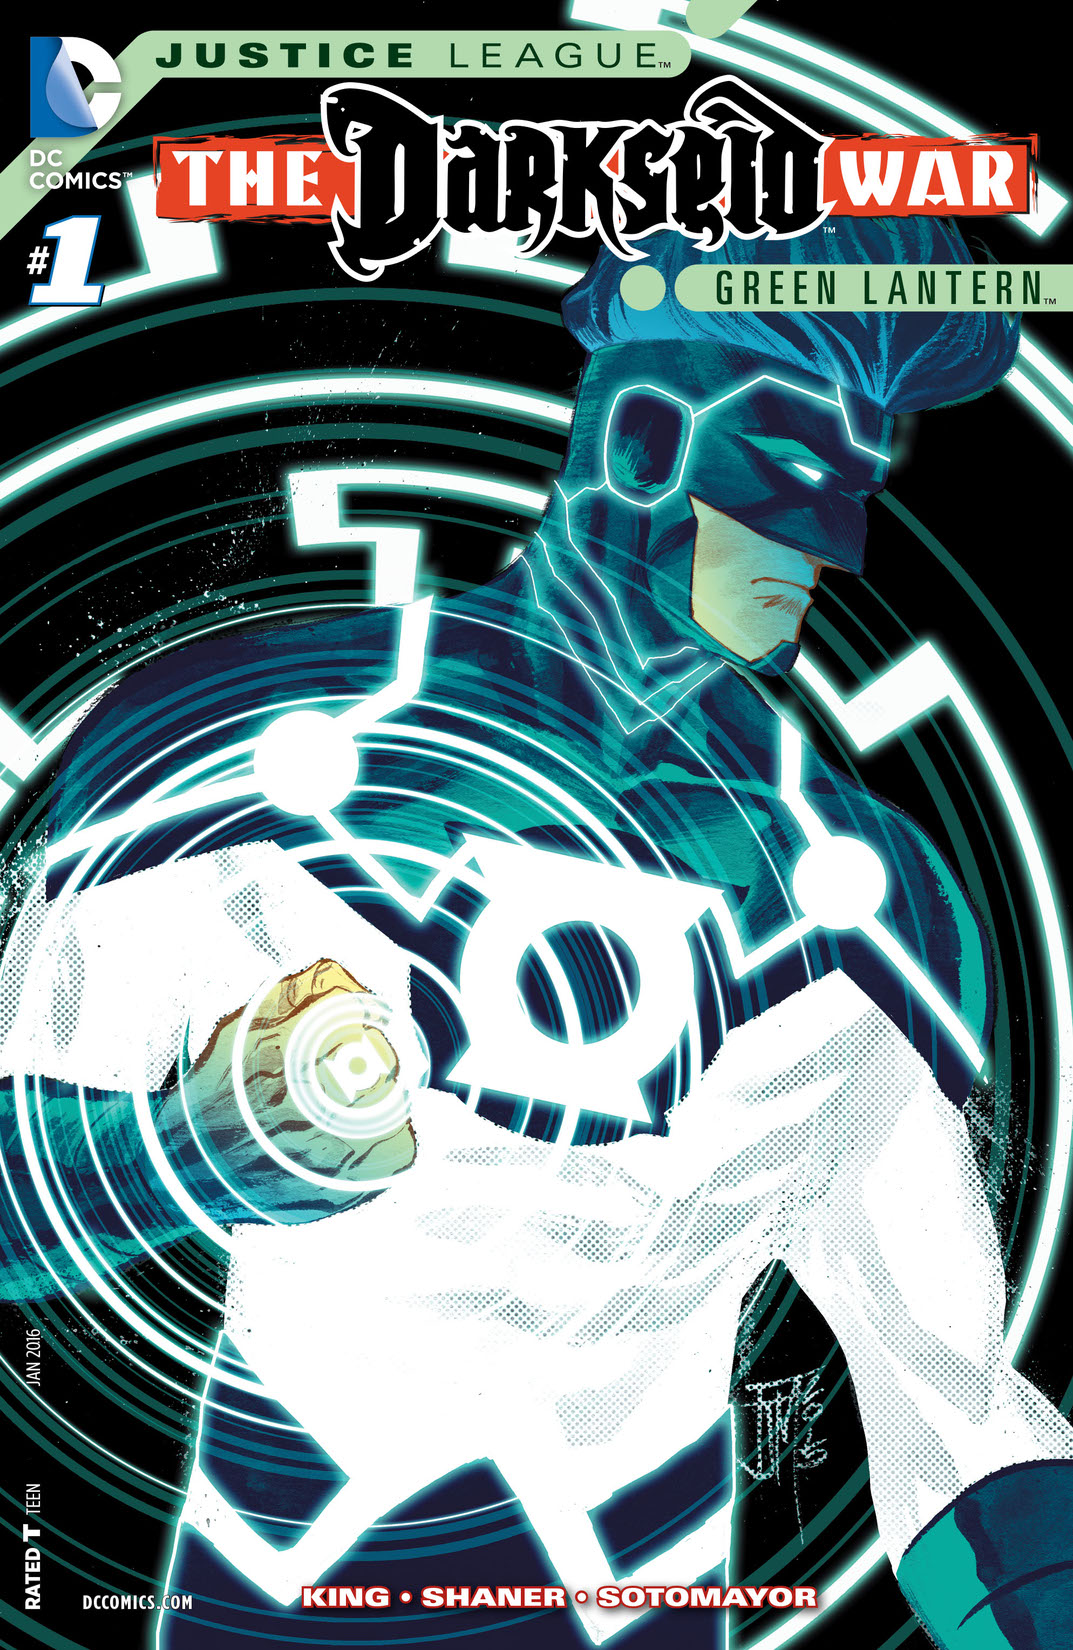 Justice League: Darkseid War: Green Lantern #1 preview images